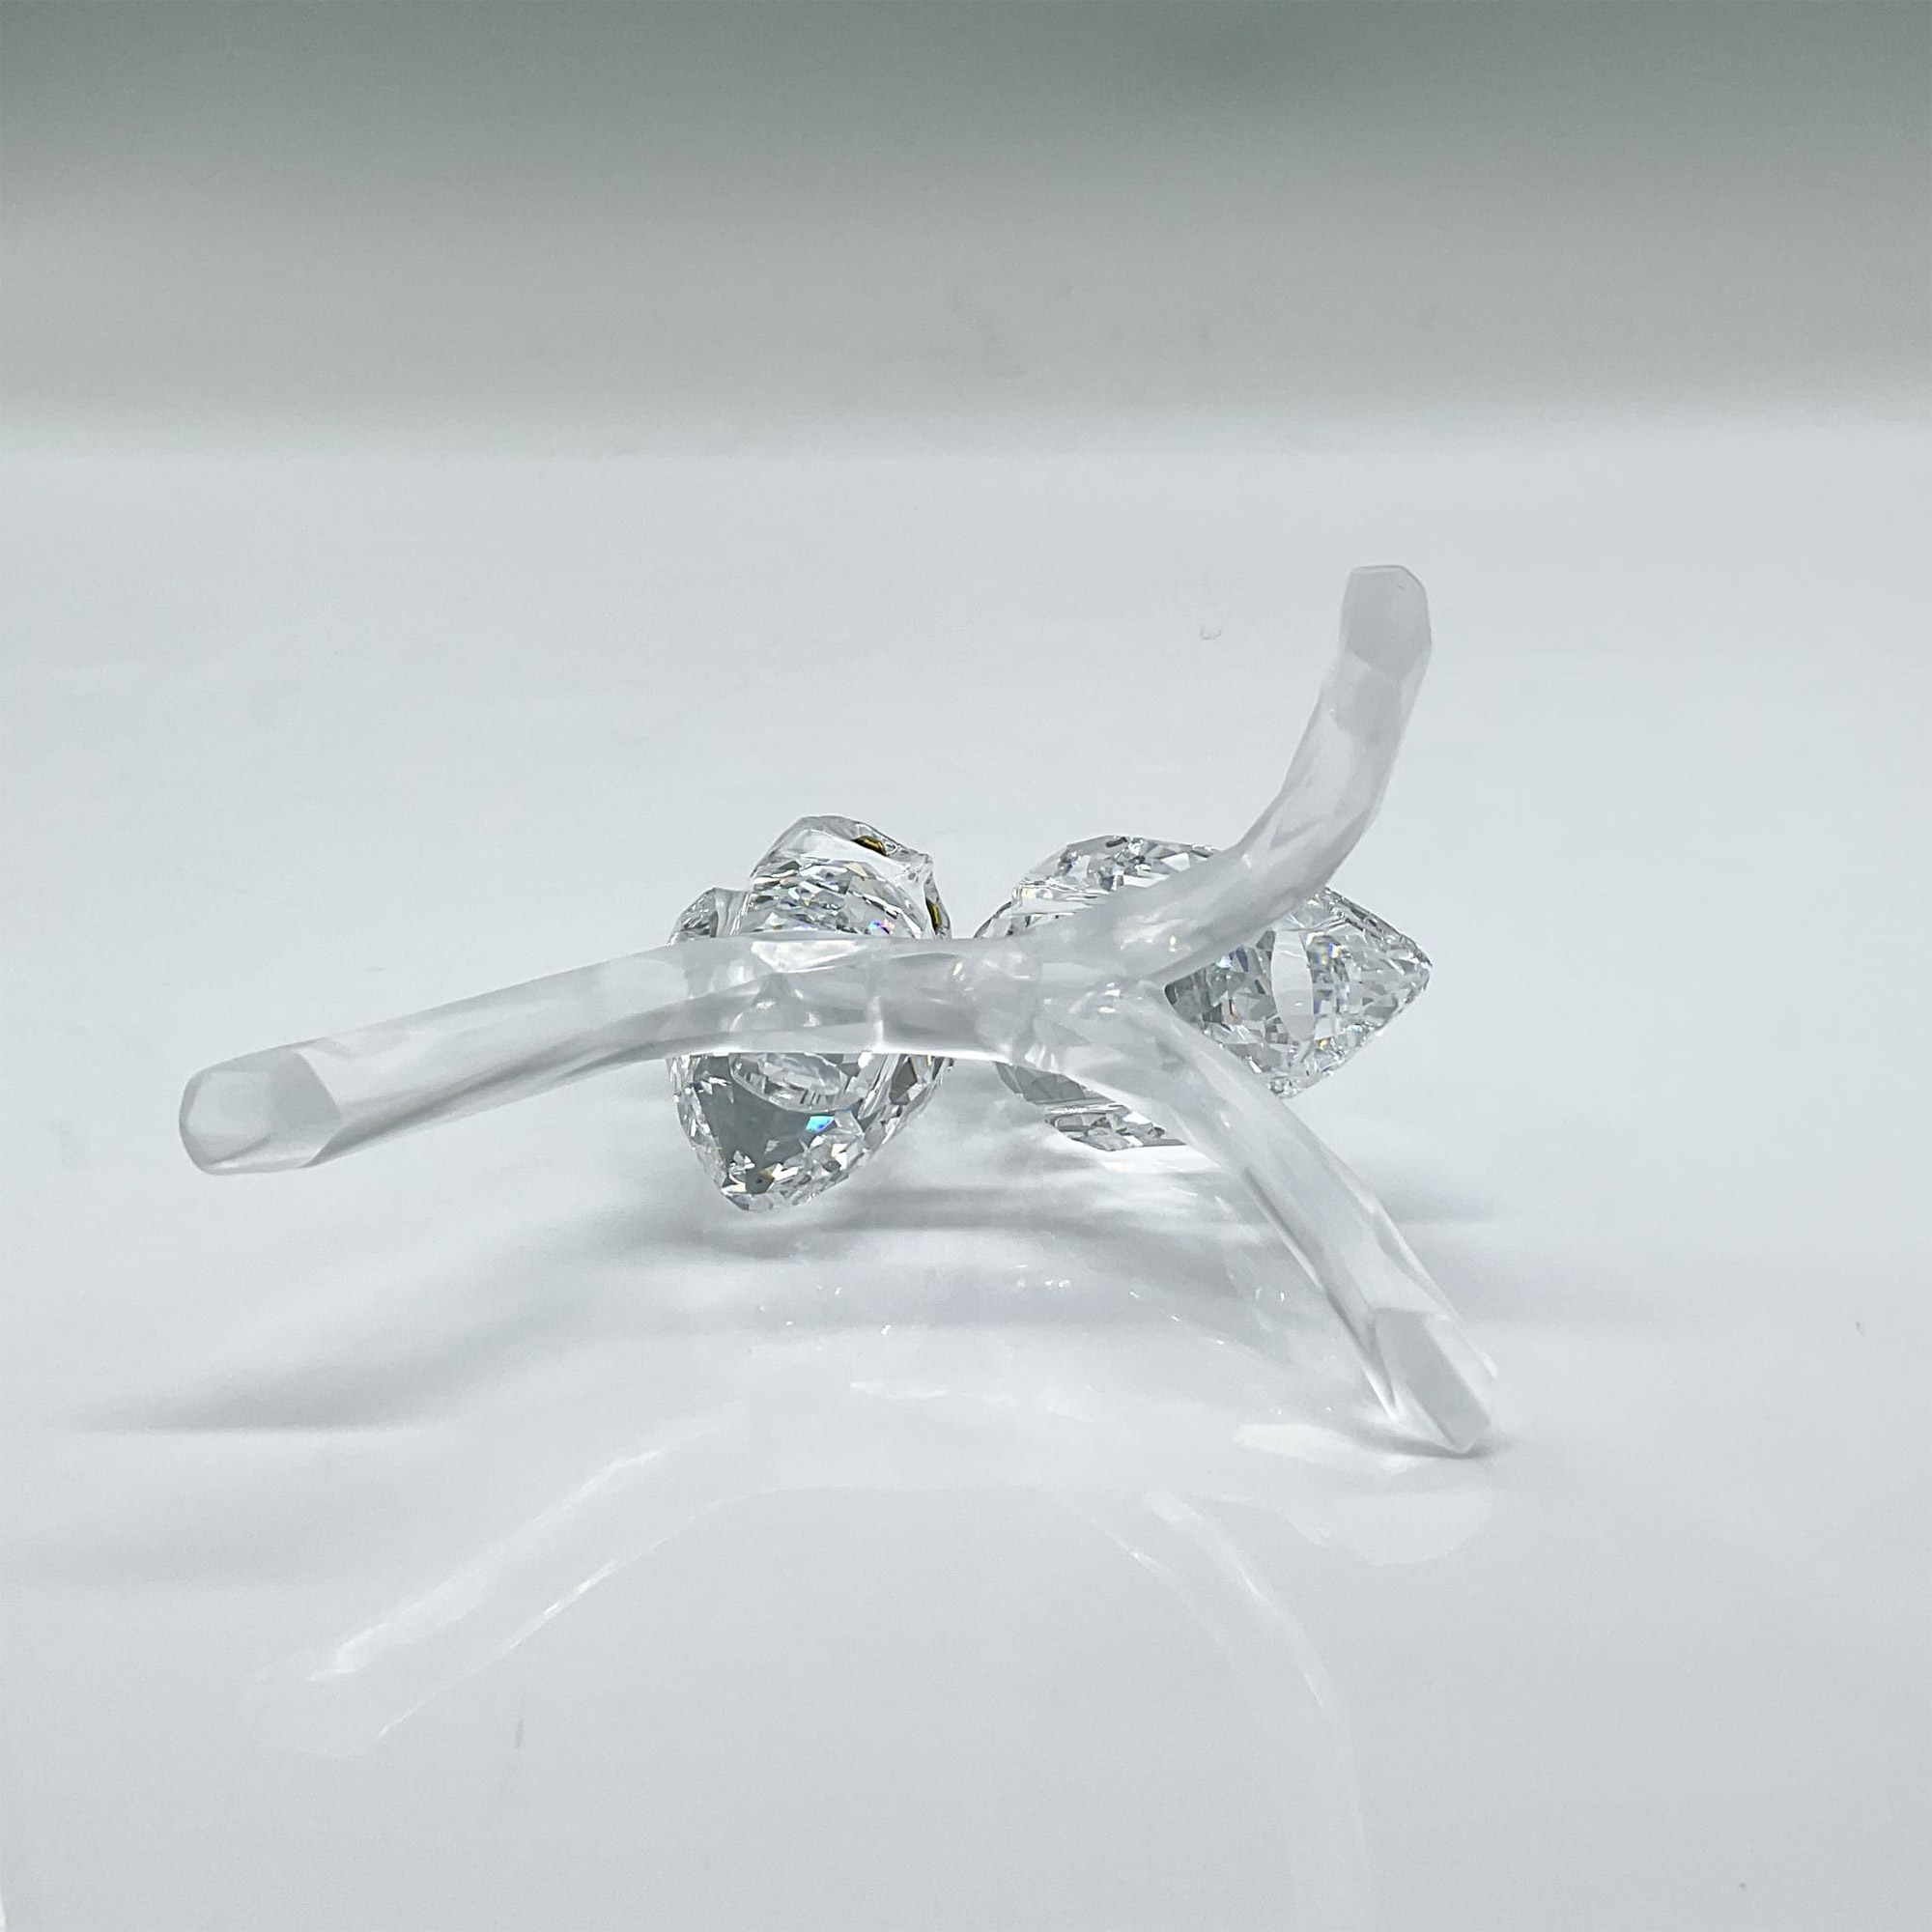 Swarovski Crystal Figurine, Pair of Owls - Image 3 of 4